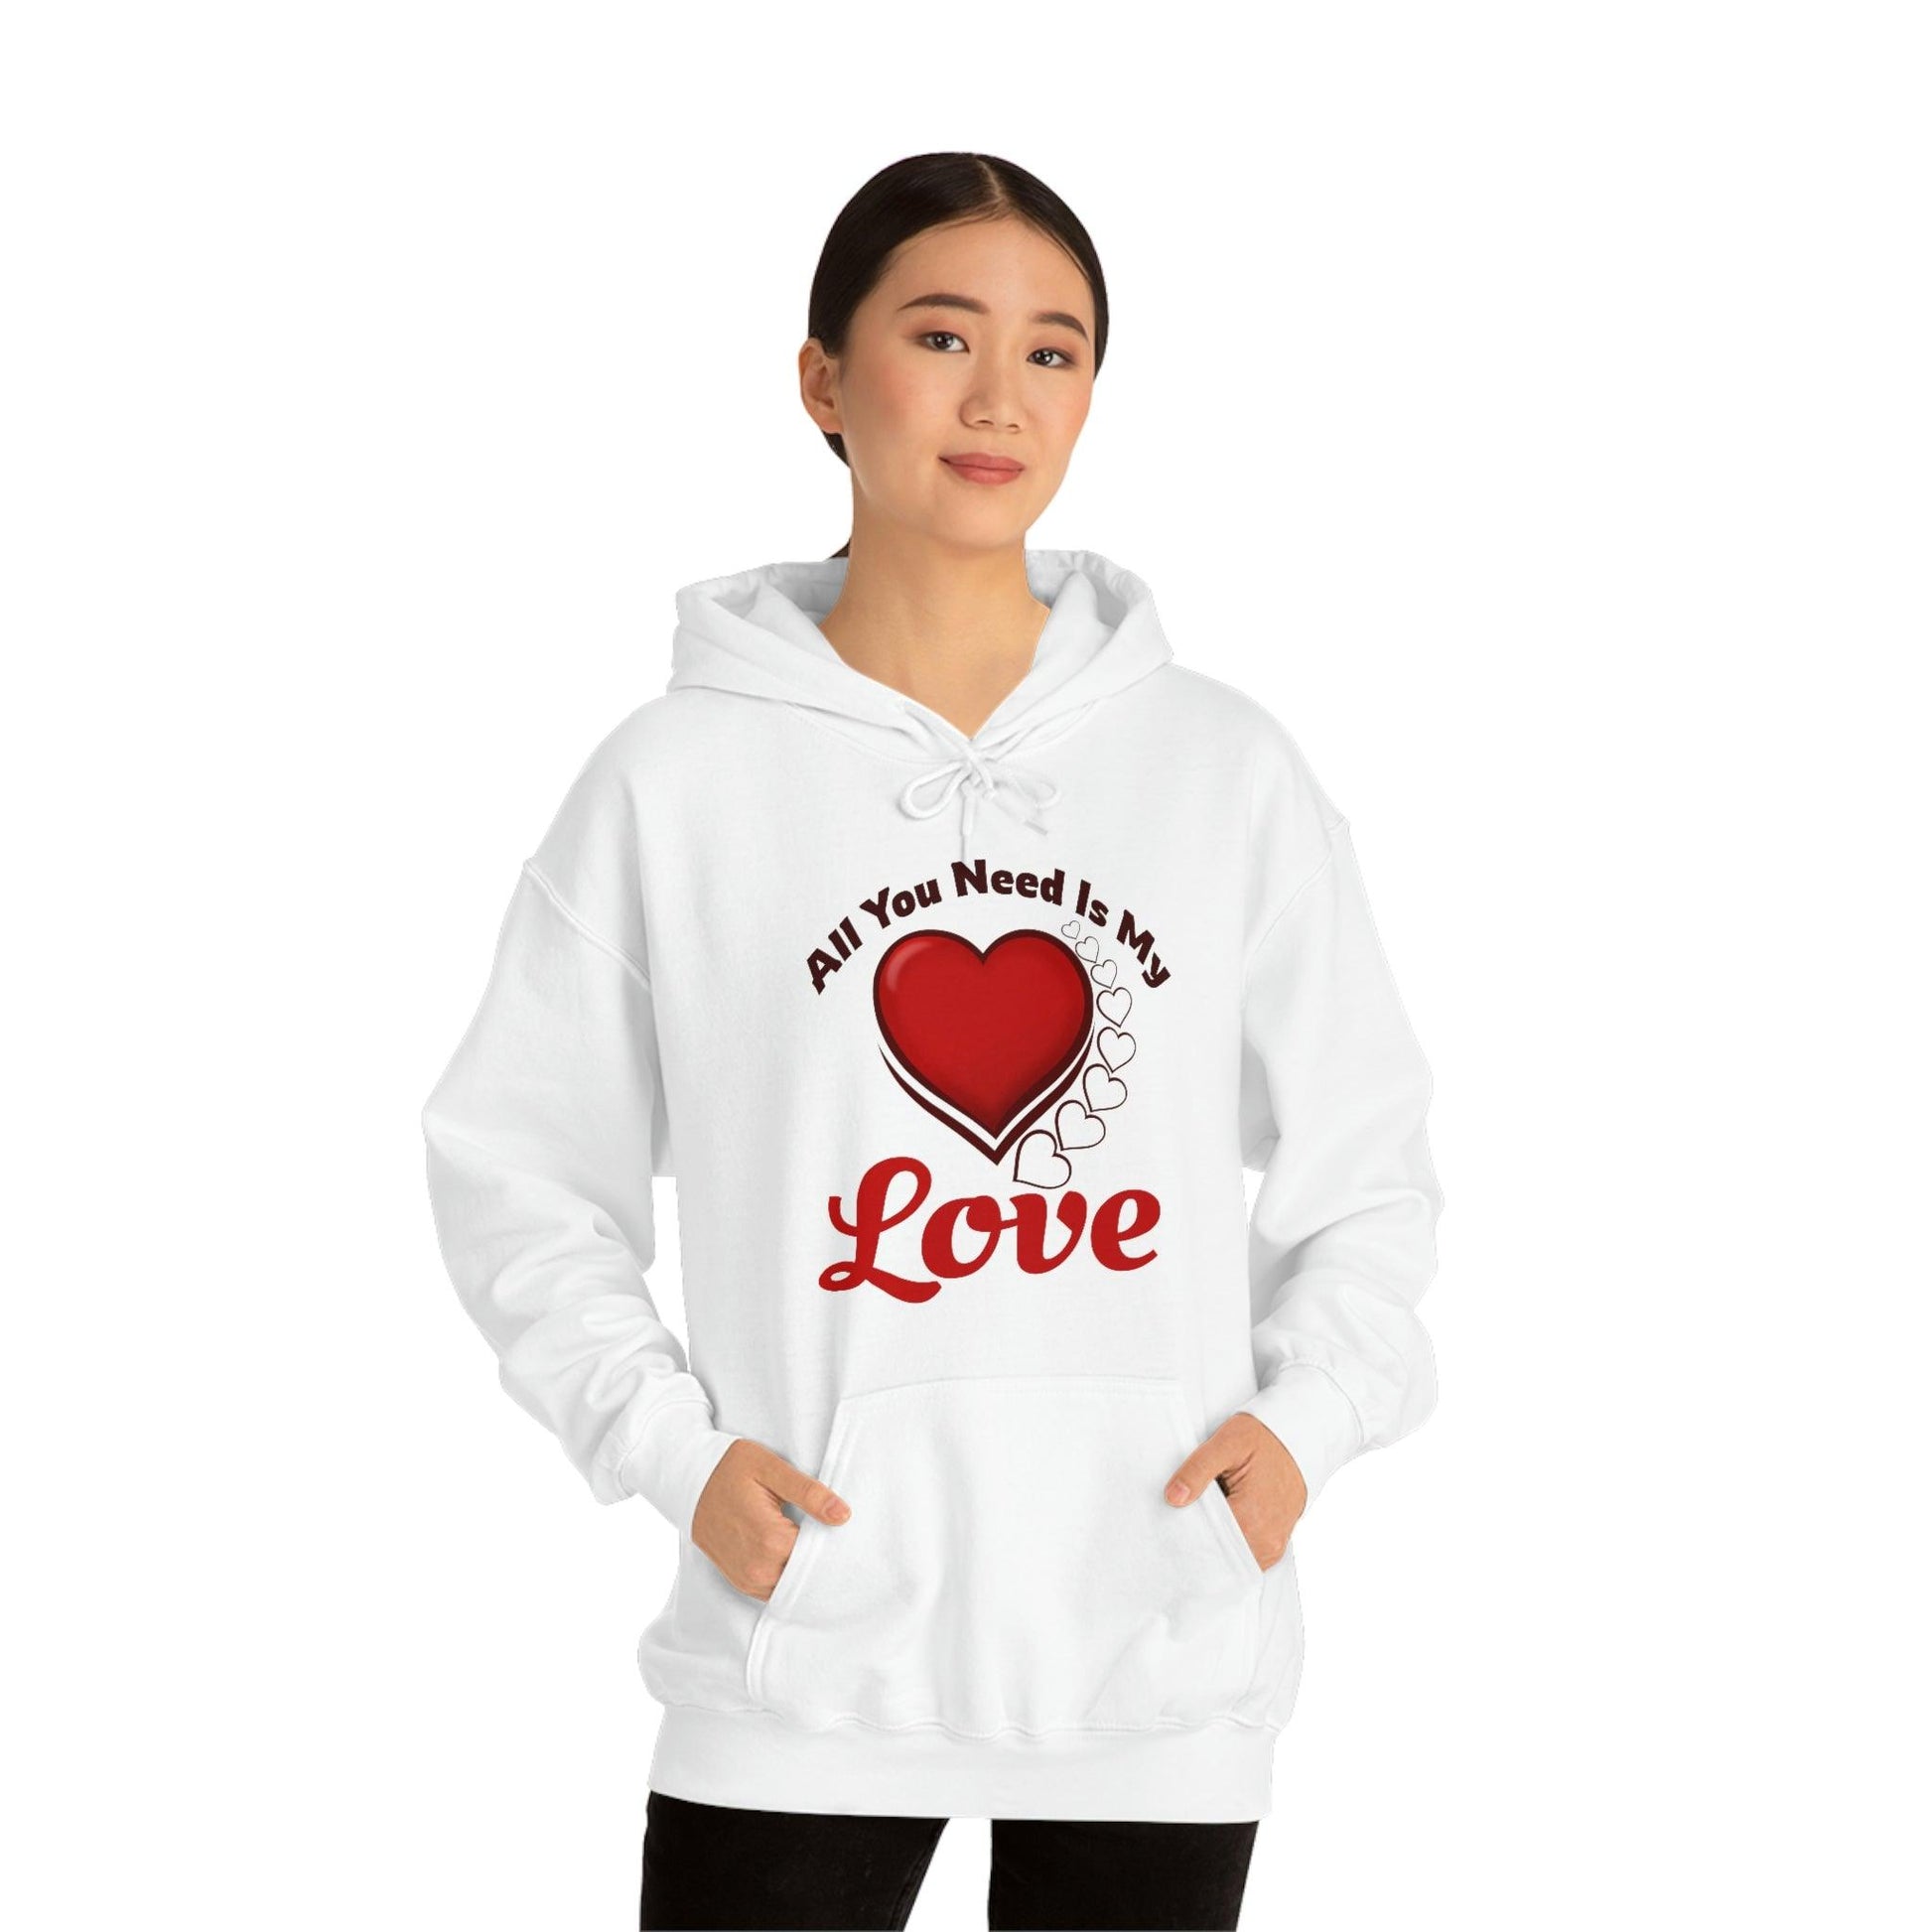 All you need is My Love Hooded Sweatshirt - Giftsmojo